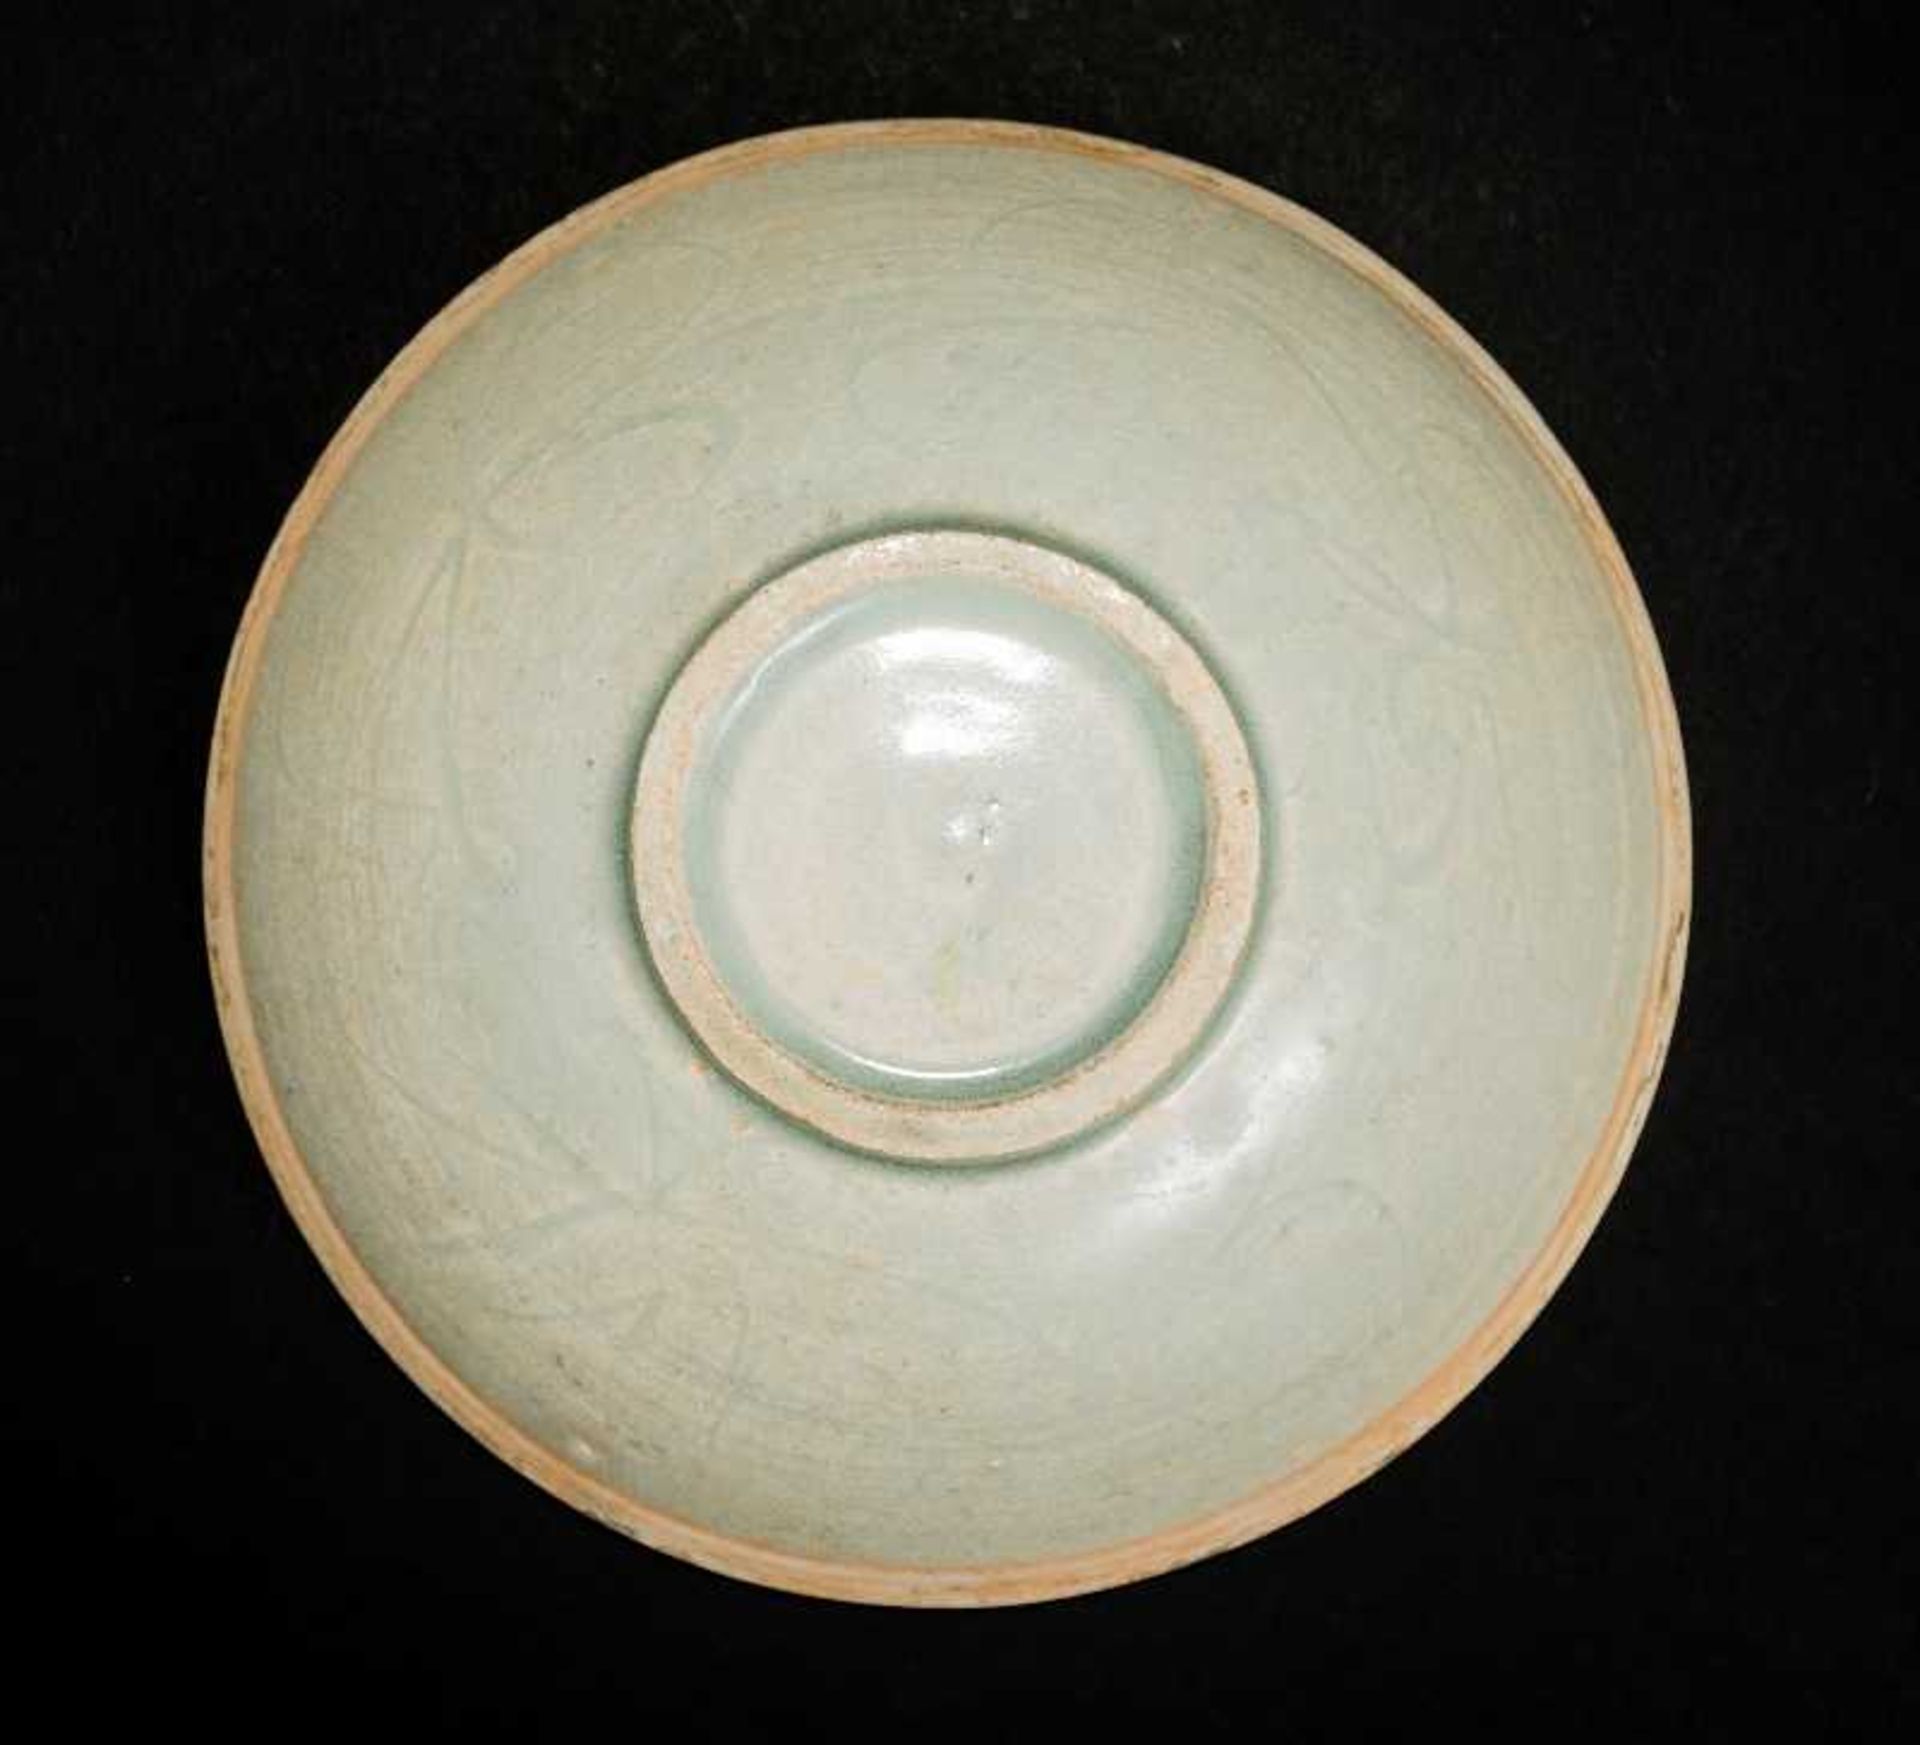 TIEFE SCHALE MIT QINGBAI-GLASURProto-Porzellan. China, Song bis Yuan, ca. 12. bis 13. Jh.Ein - Image 3 of 4